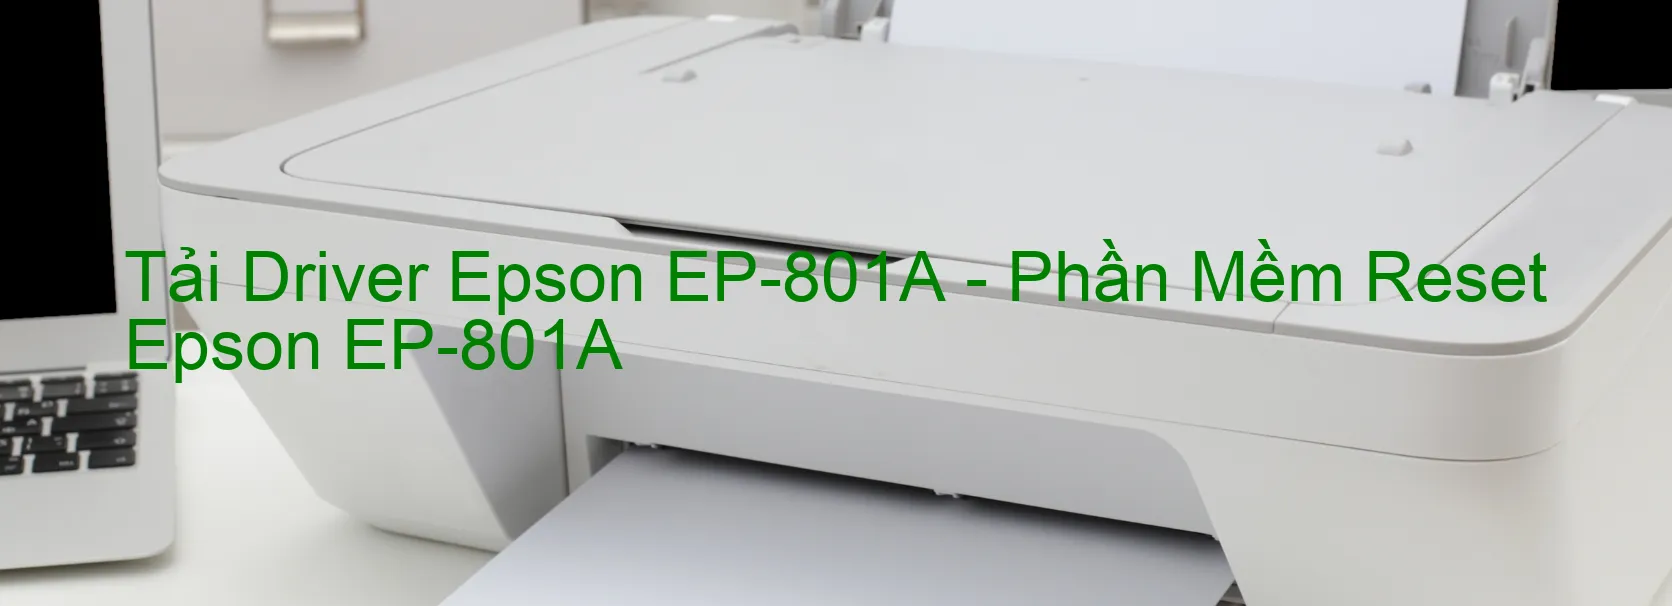 Driver Epson EP-801A, Phần Mềm Reset Epson EP-801A